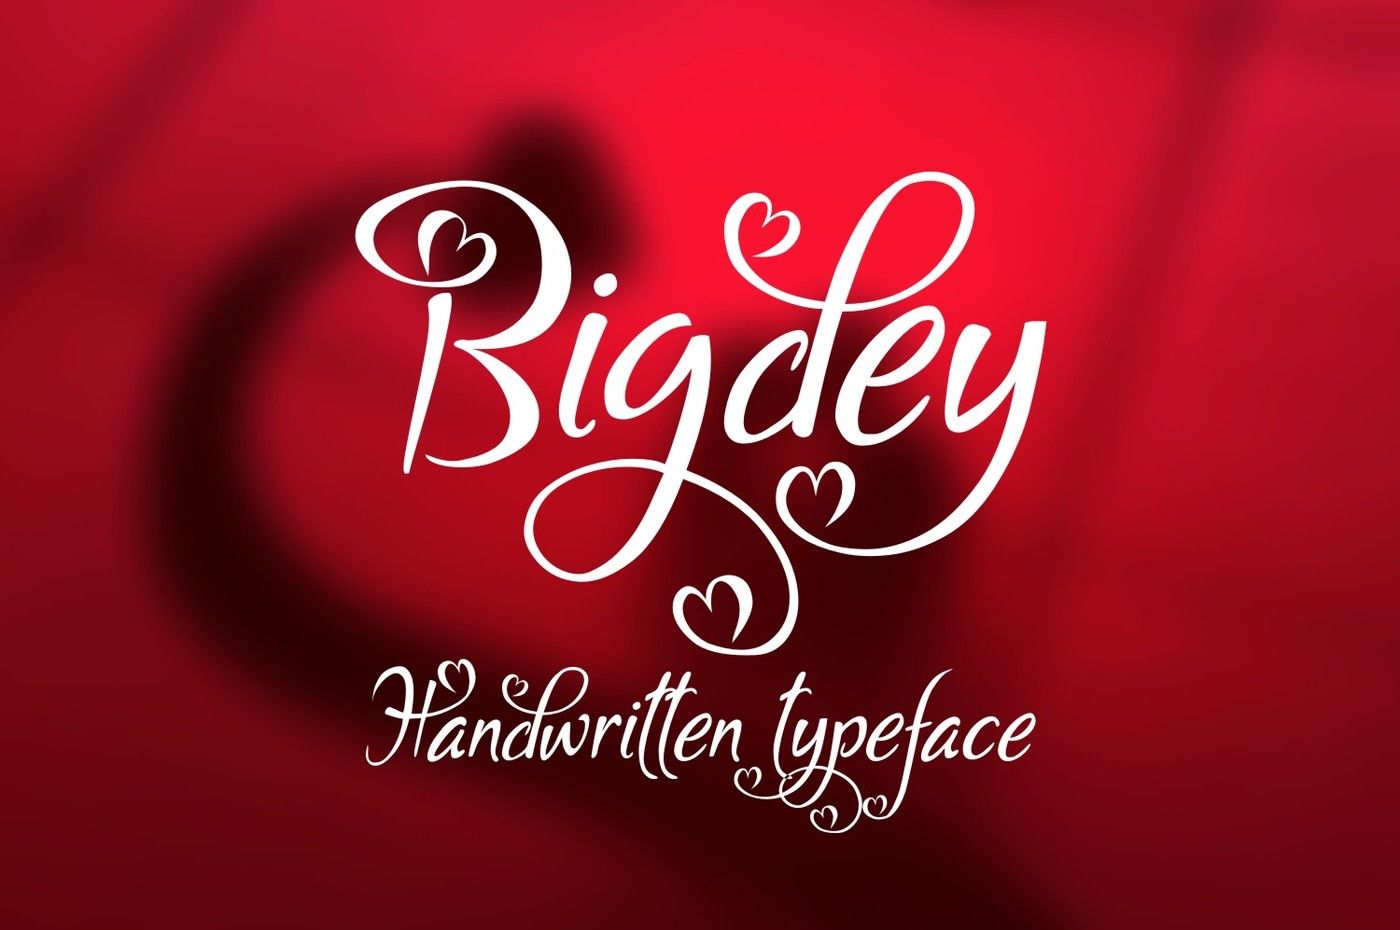 Bigdey By Digitaltypefaces Thehungryjpeg Com